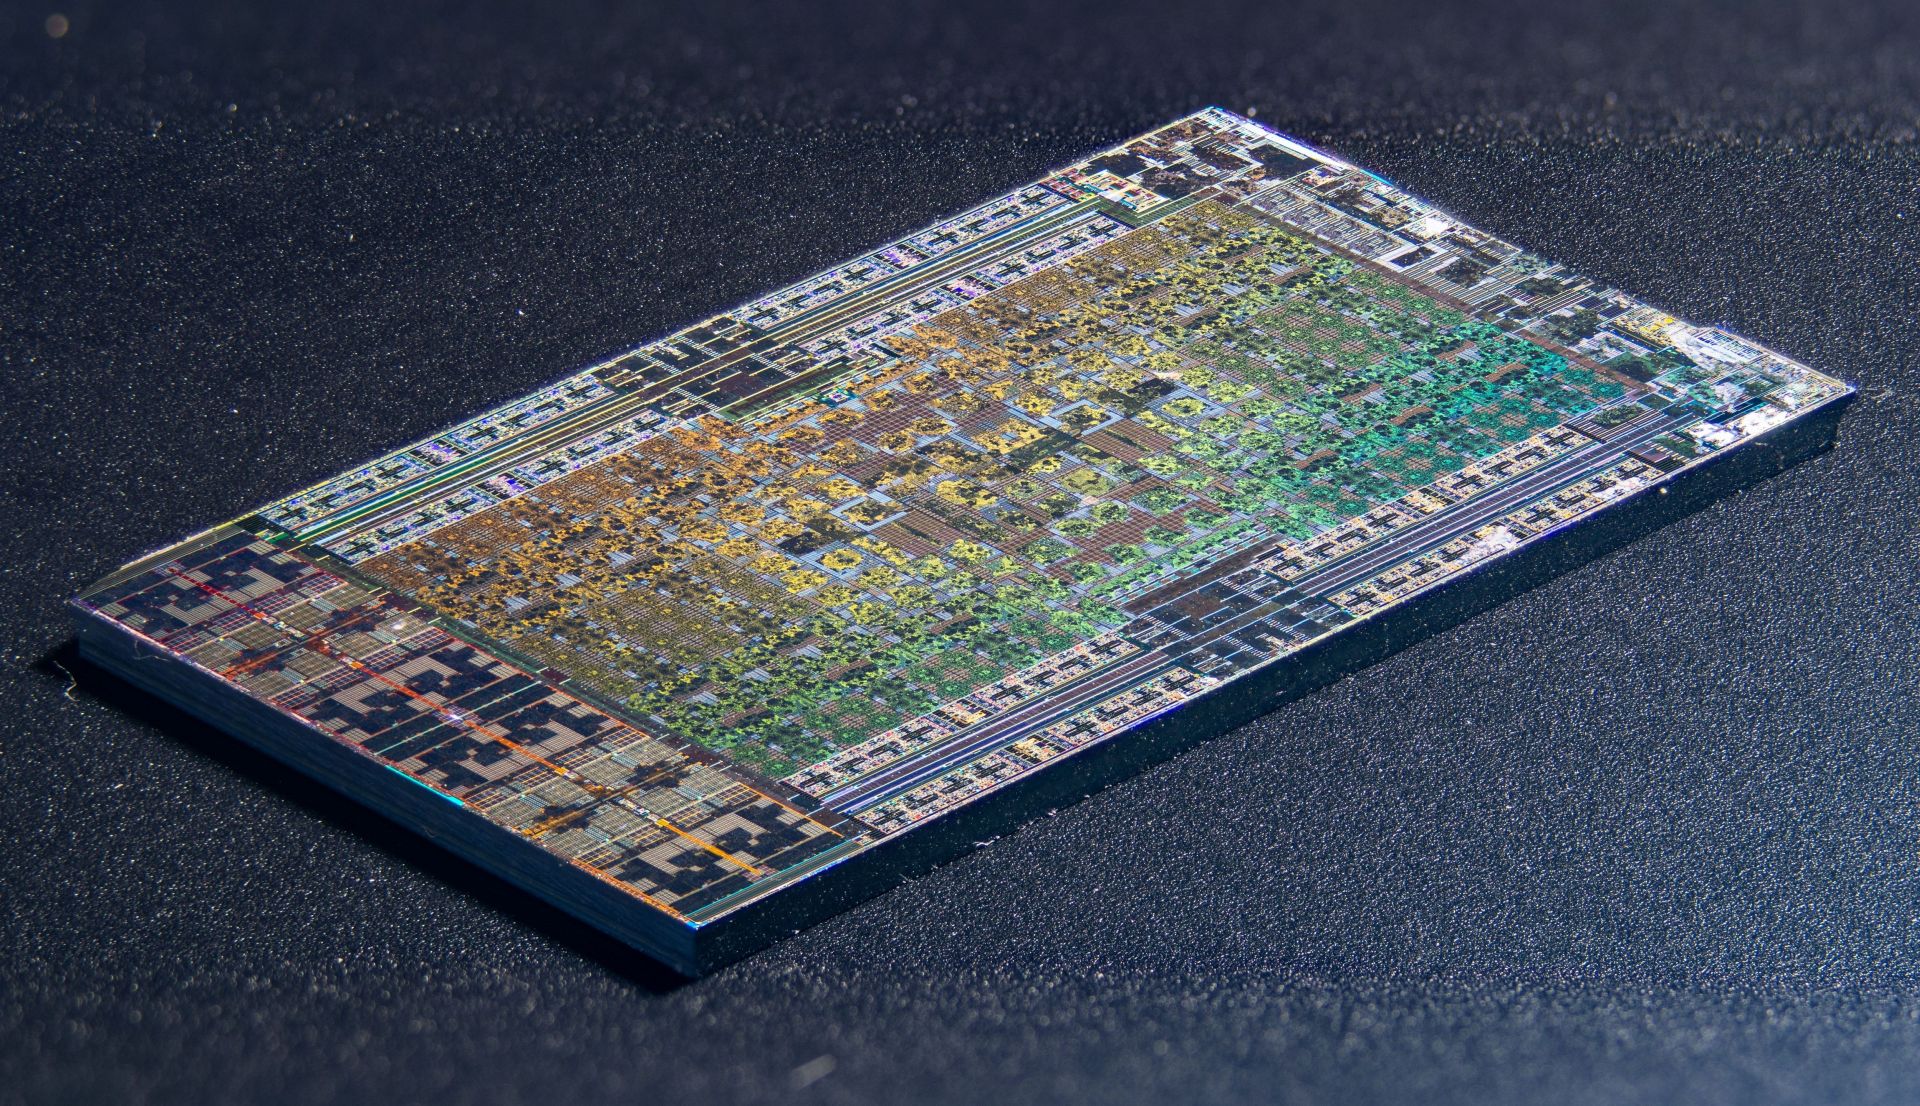 AMD PS5 die close up 2 1920